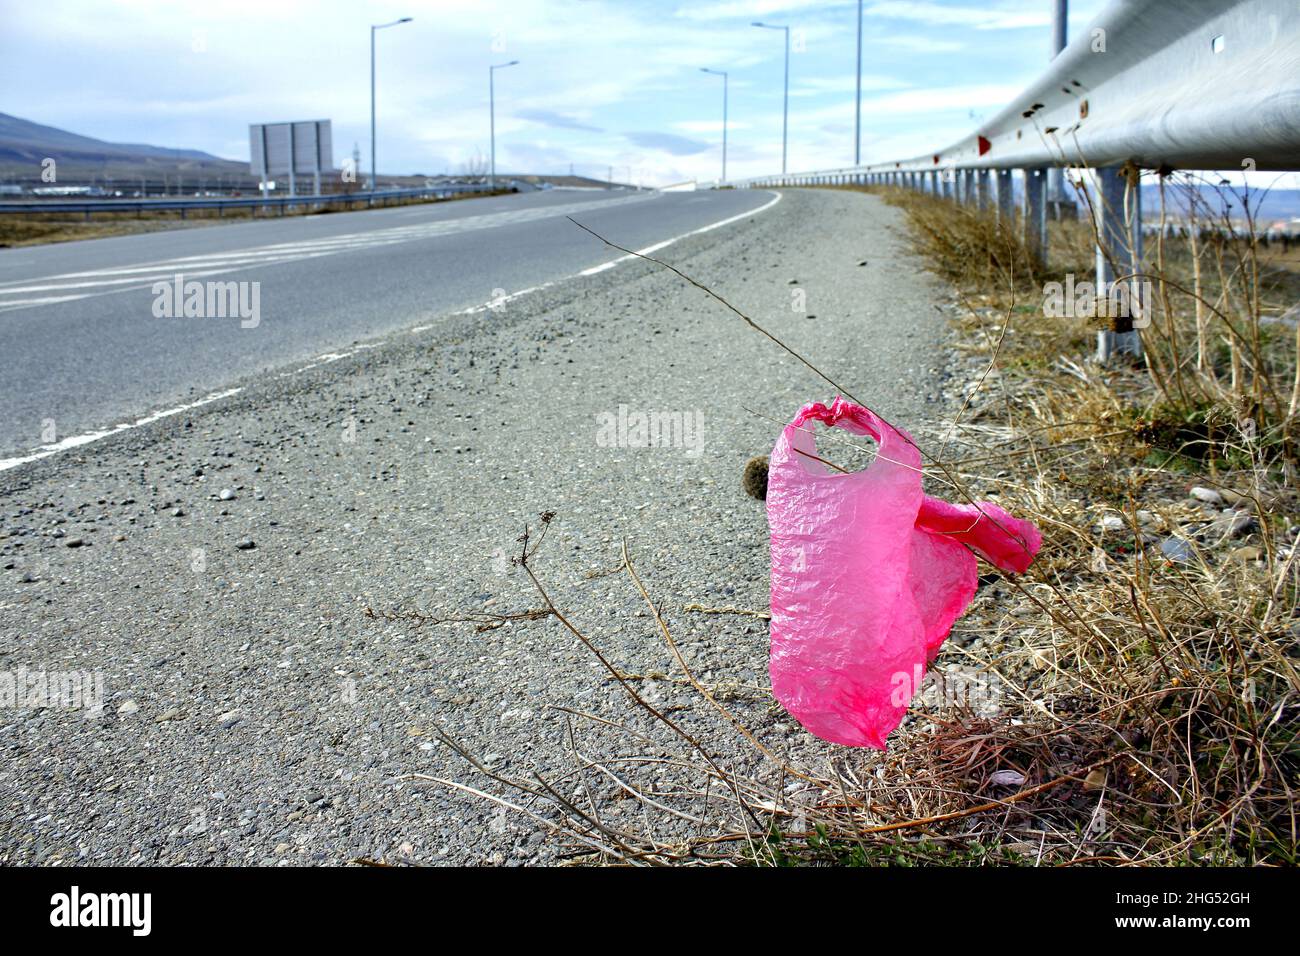 Pink polyethylene pash thrown away on the highway. Stock Photo